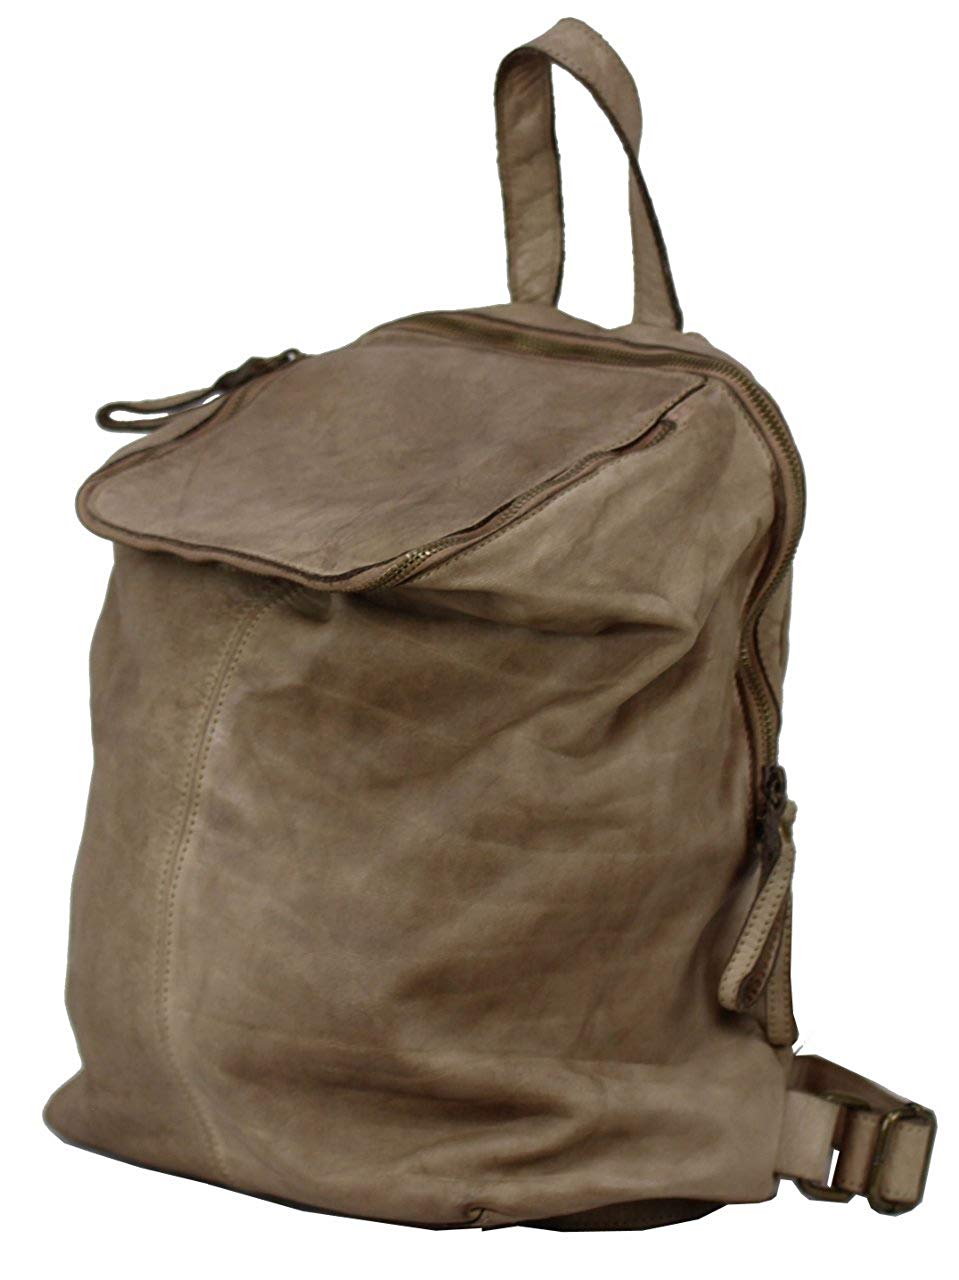 BOZANA Bag Richie beige Backpacker Designer Rucksack Damenhandtasche Schultertasche Leder Nappa sheep ItalyNeu